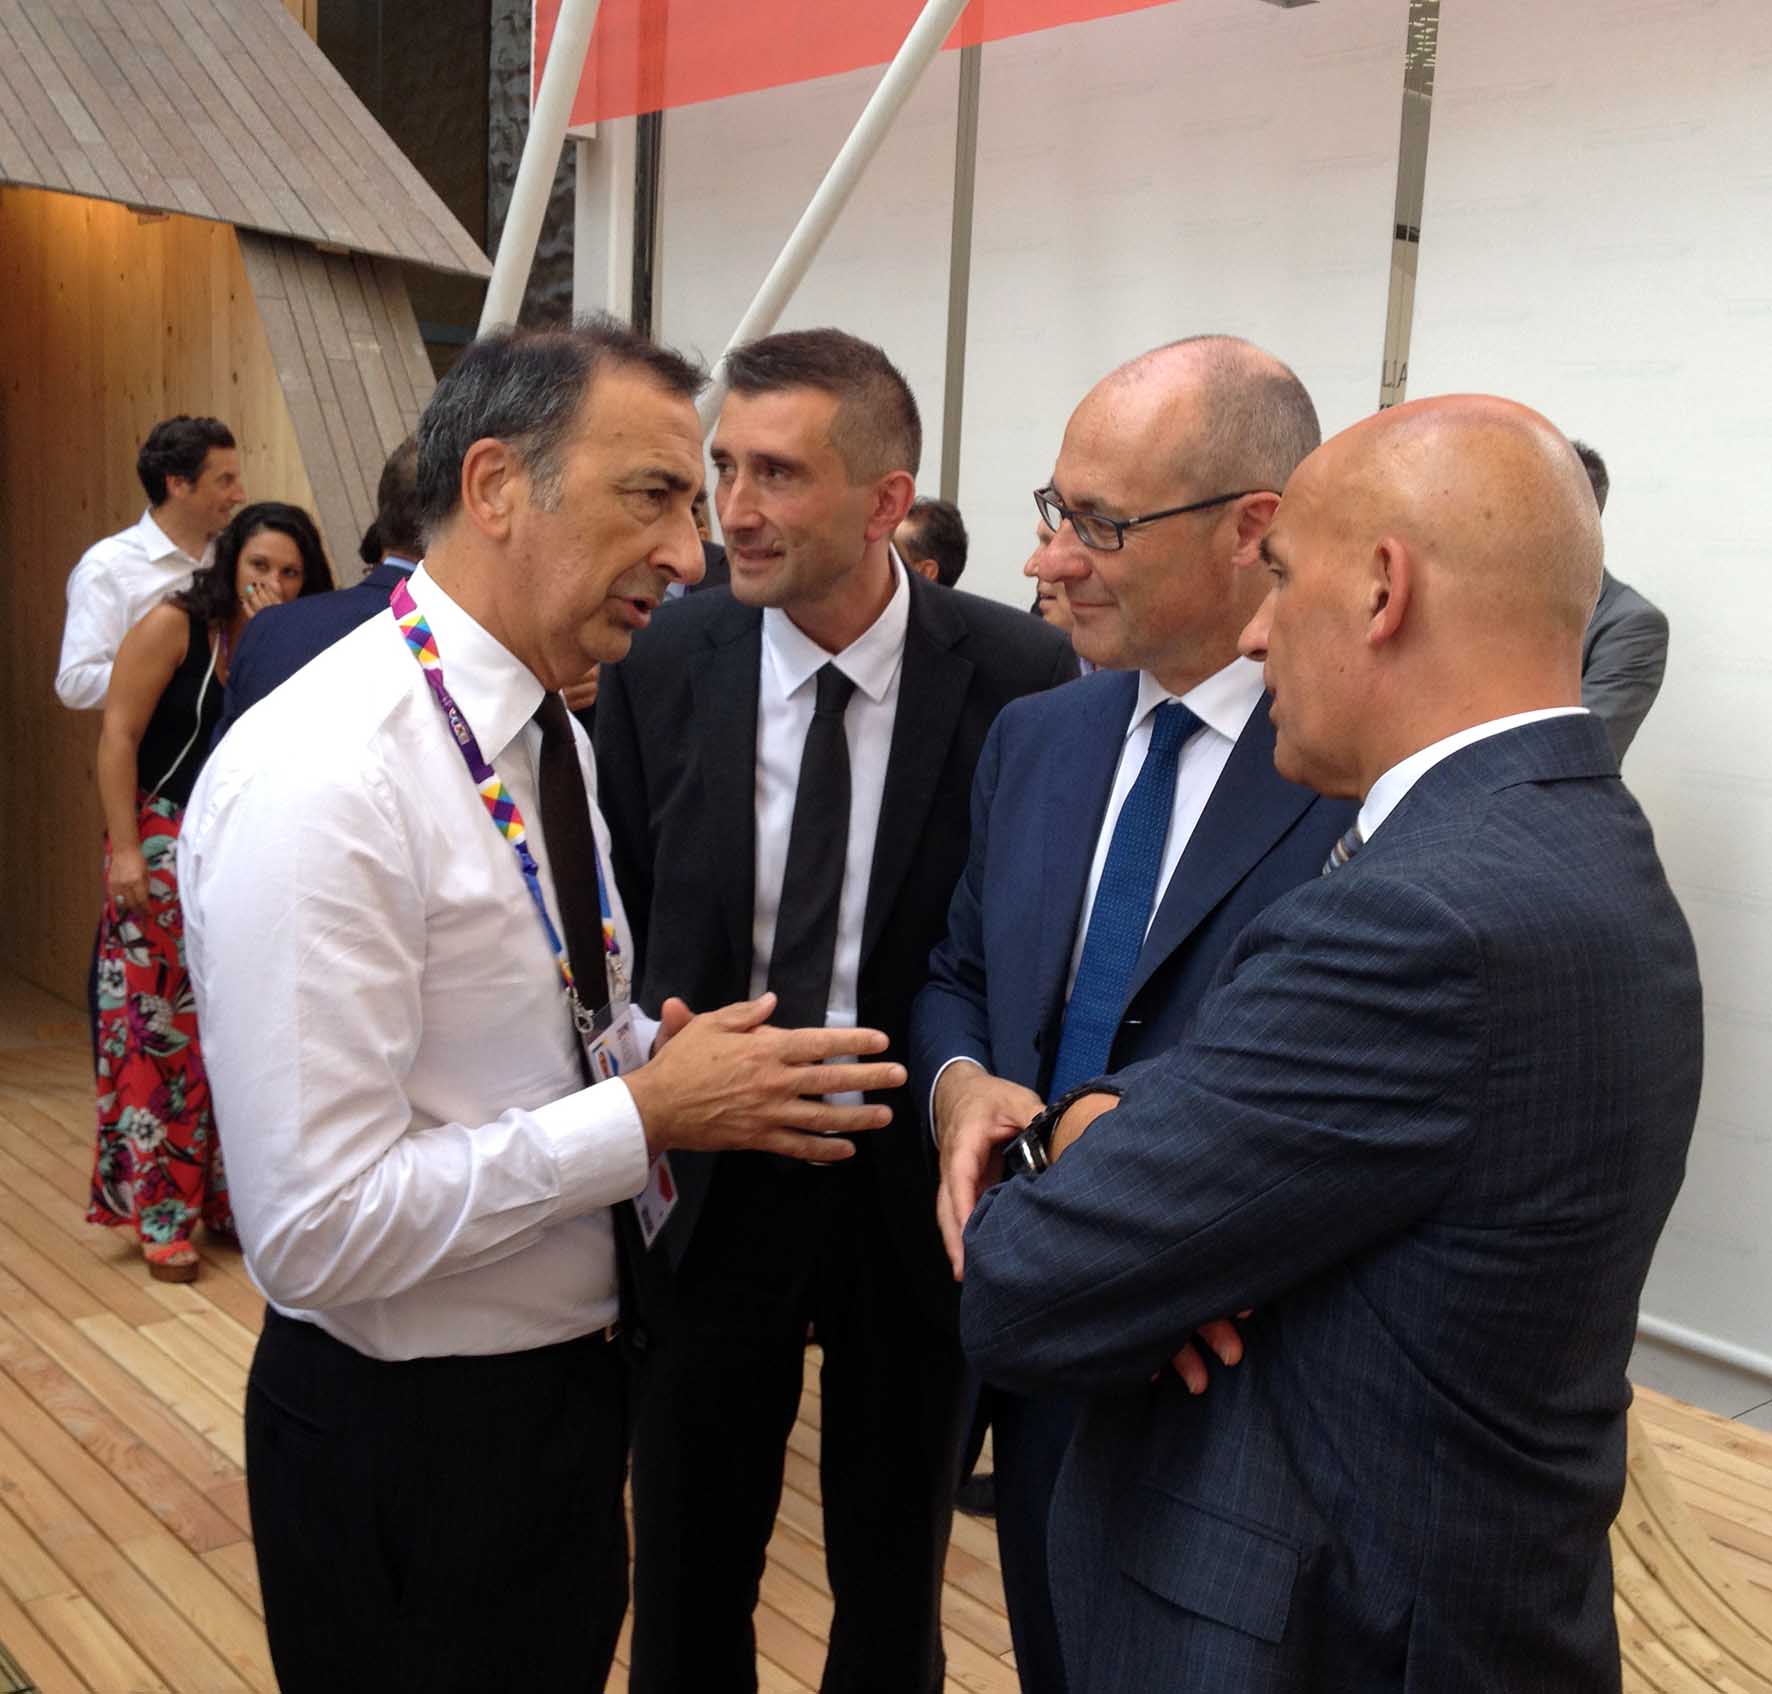 Expo 2015 commissario sala dallapiccola rossi mellarini